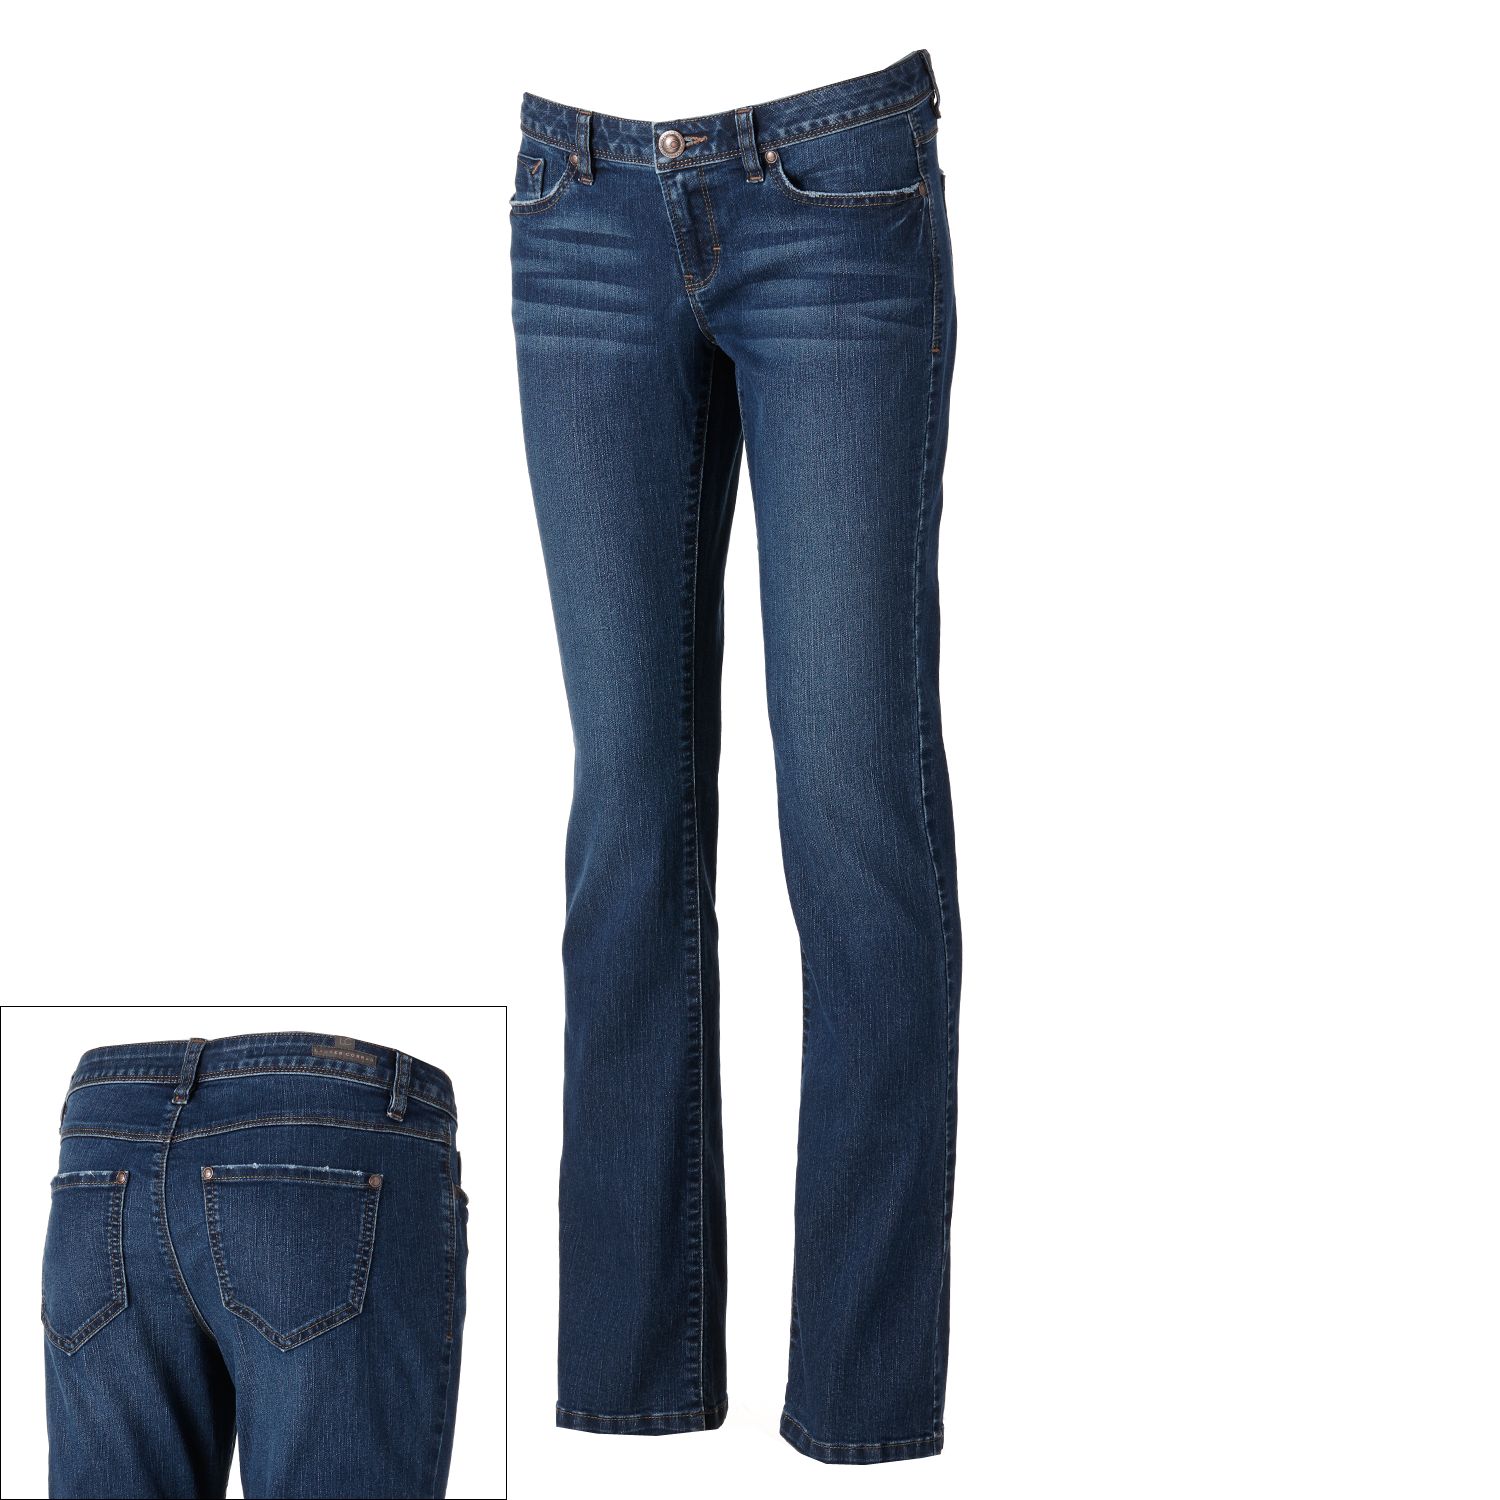 jeans levis wedgie